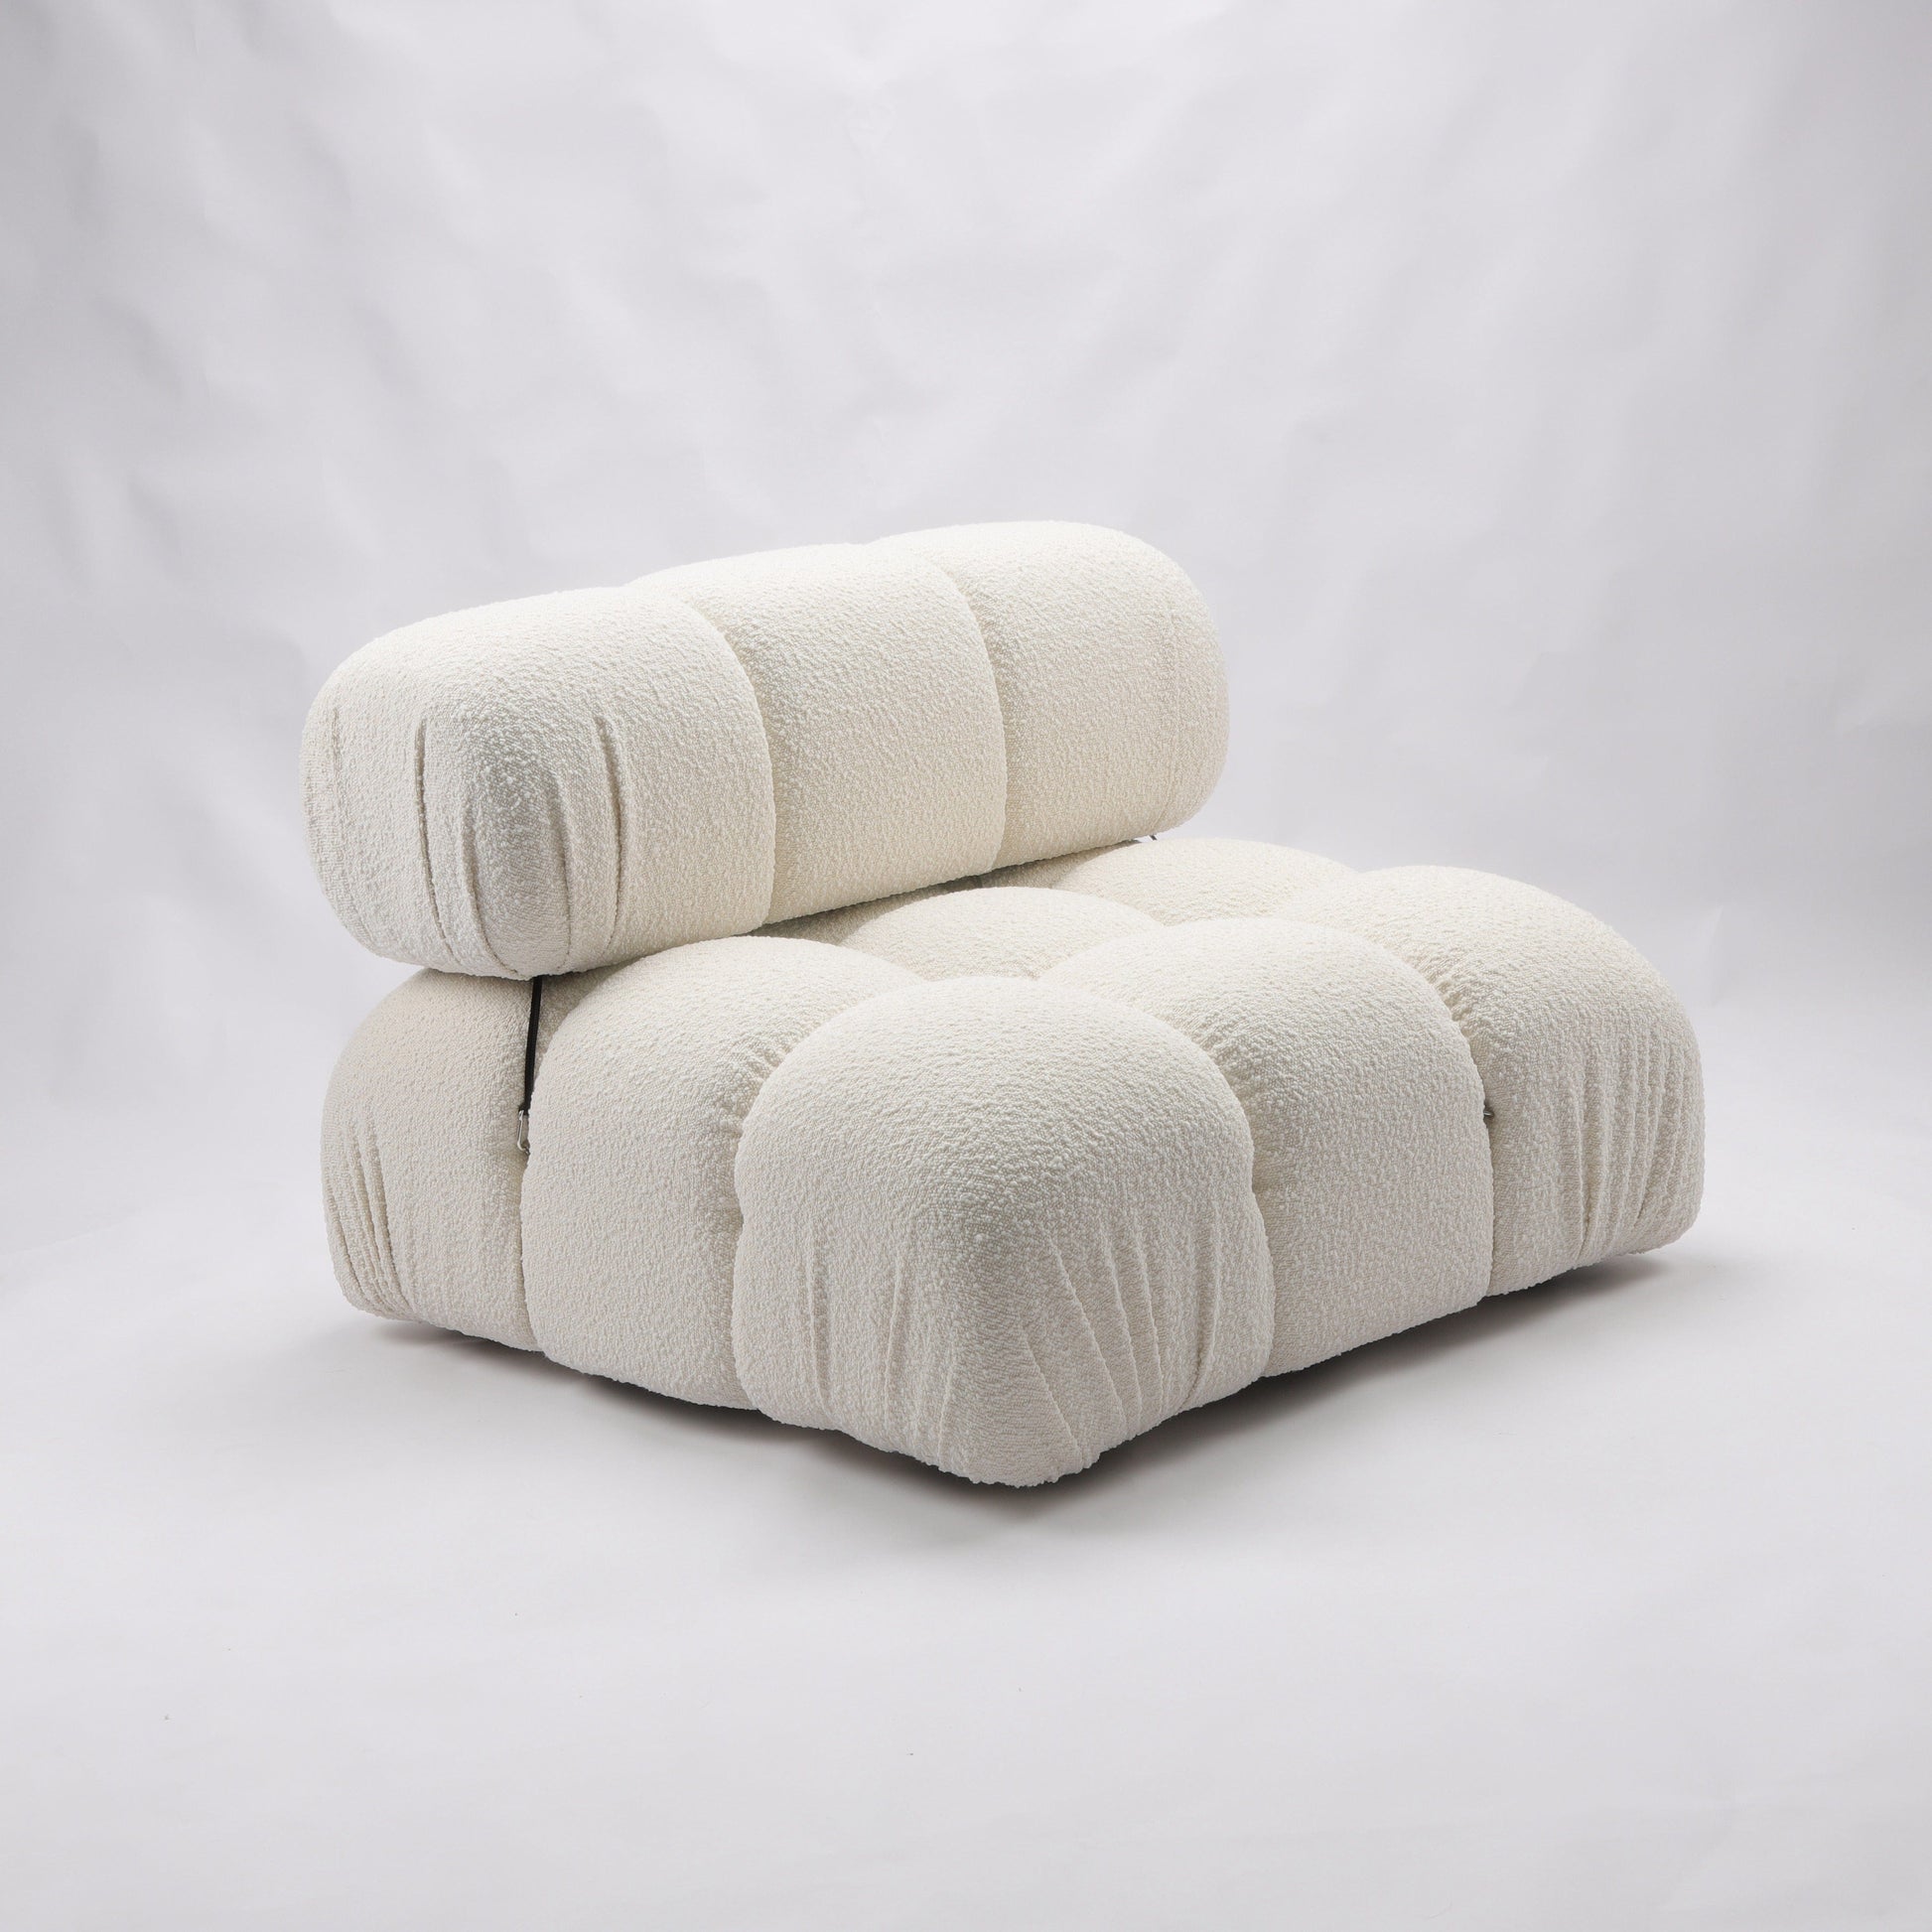 Gioia 1-Seater Chair - No Arm - Cream/White Boucle - GFURN